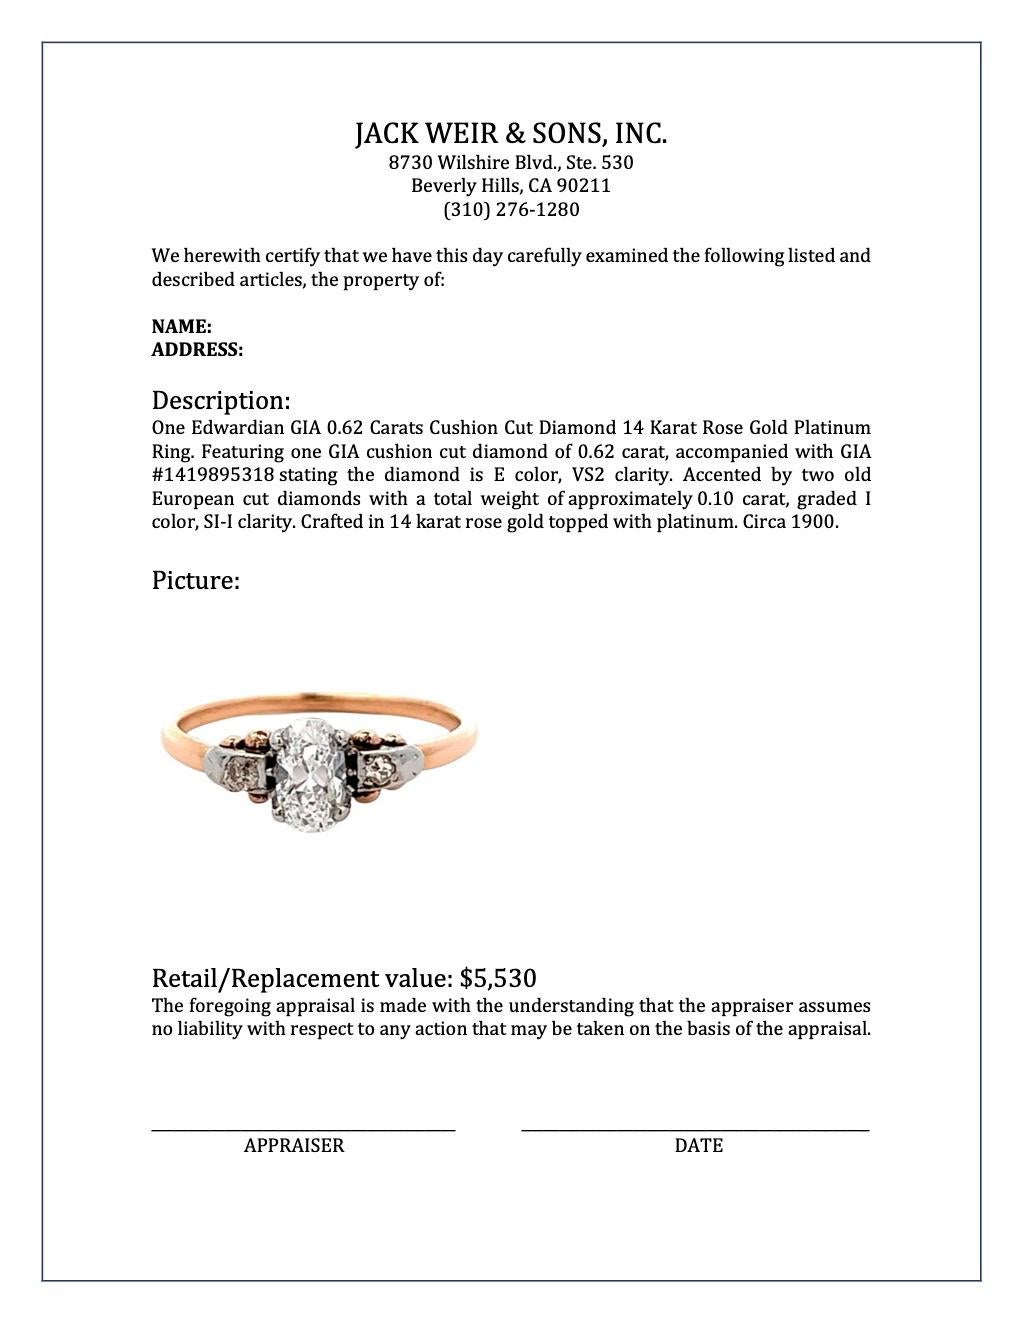 Edwardian GIA 0.62 Carats Cushion Cut Diamond 14 Karat Rose Gold Platinum Ring 1